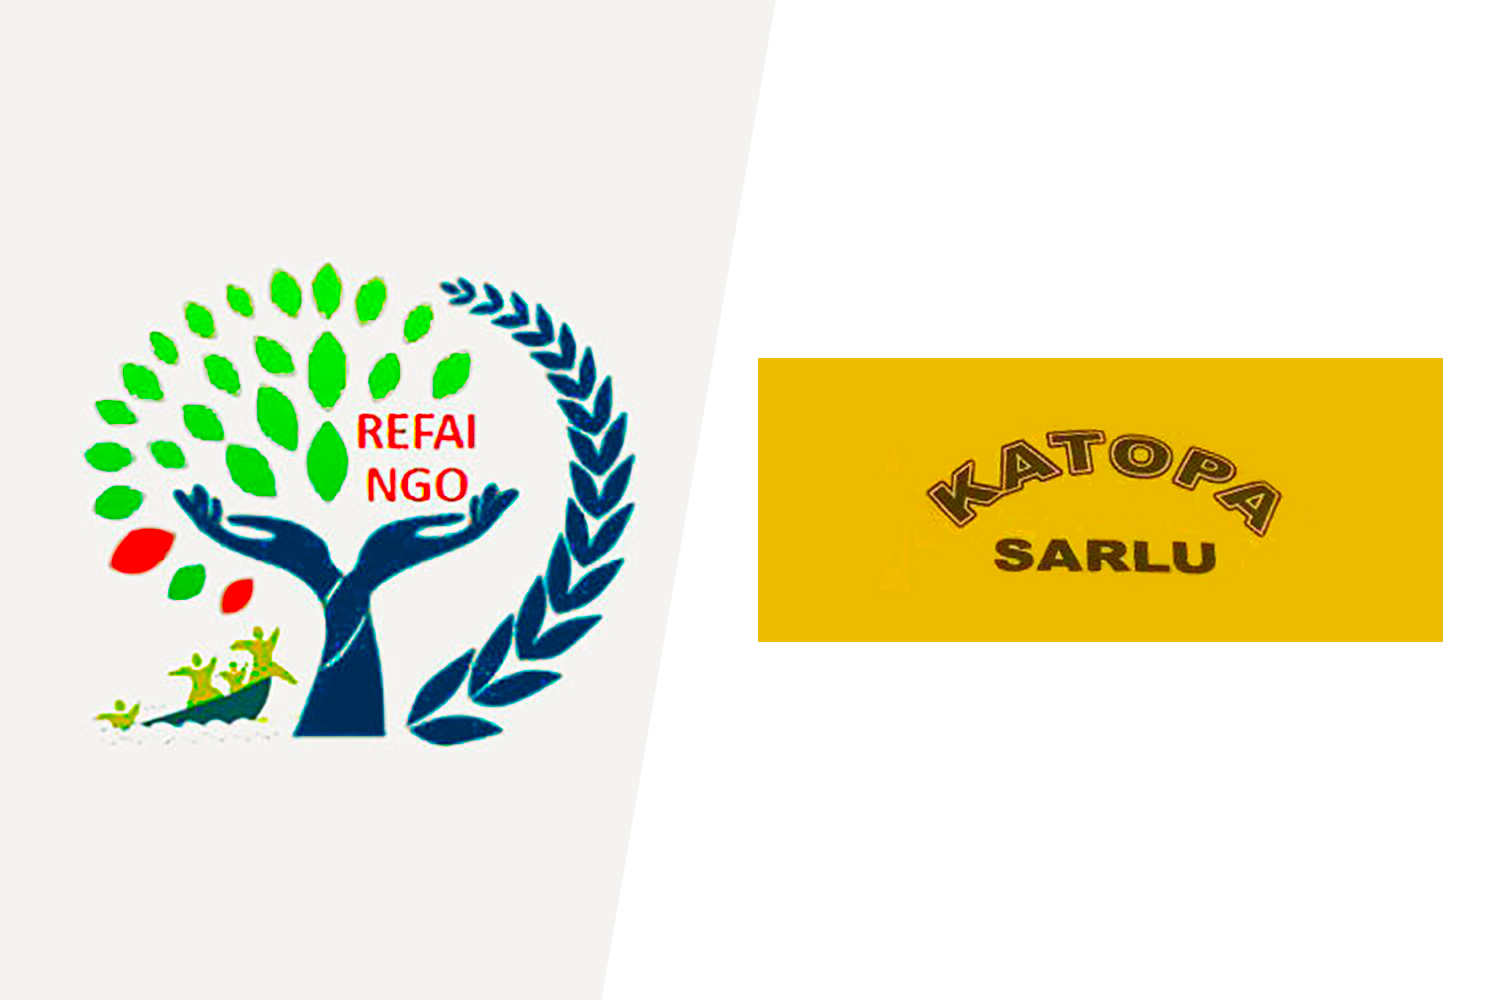 19 June 2021 &#8211; Accreditation of KATOPA Sarlu &#8211; Democratic  Republic Of Congo ,  as a Strategic Partner